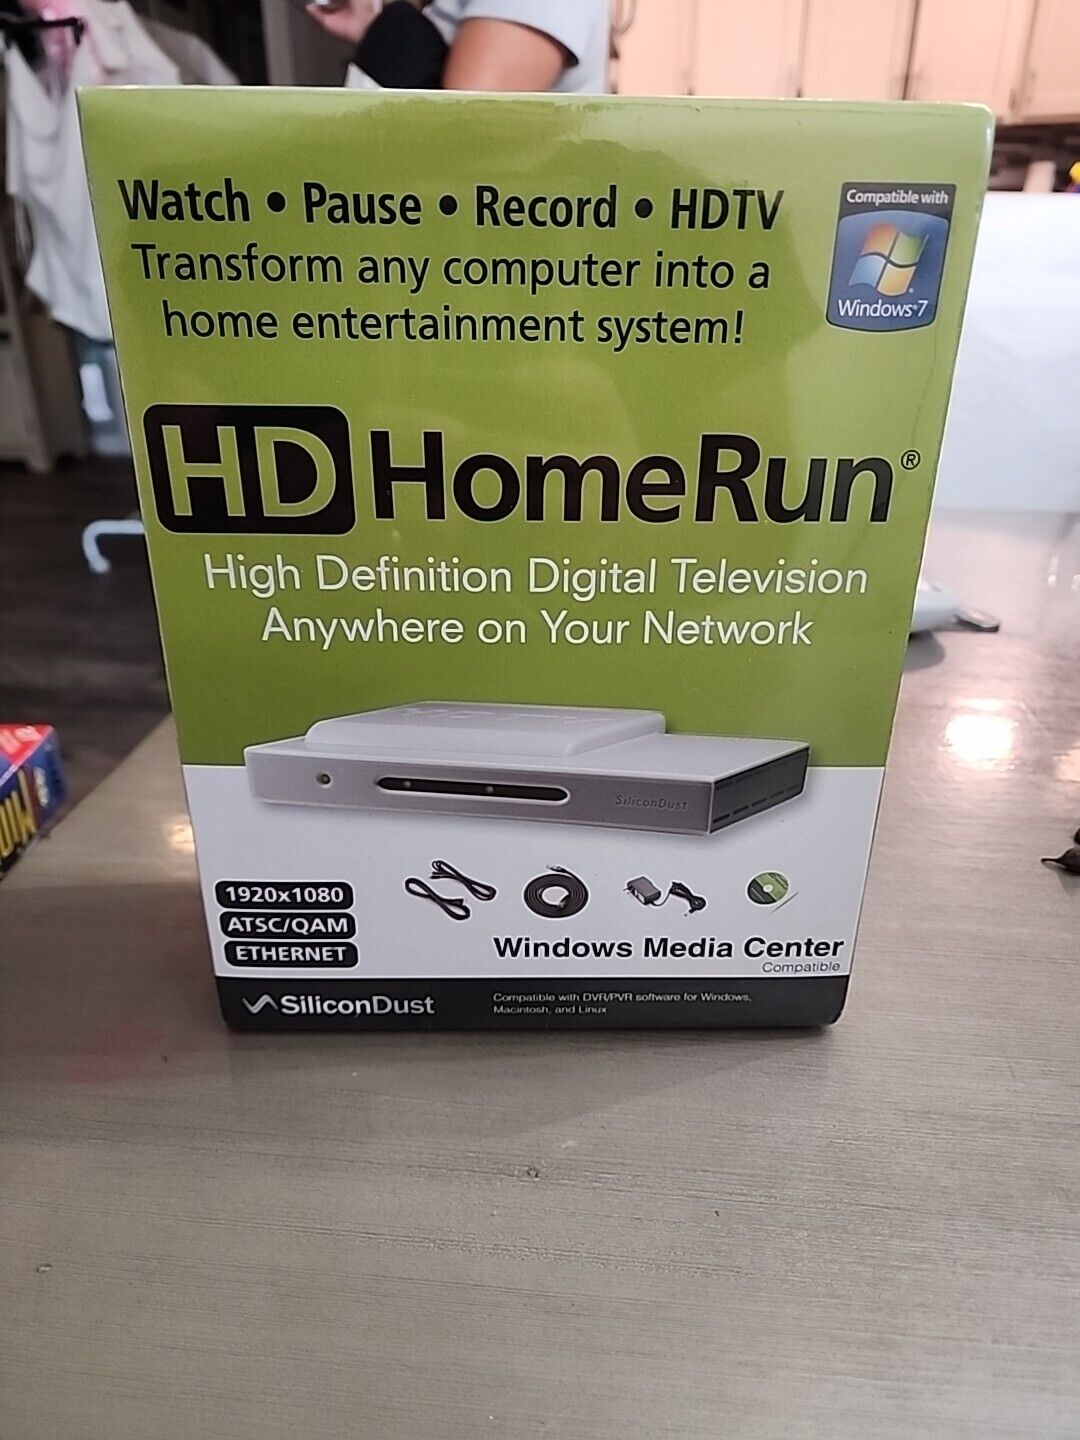 SiliconDust HD HomeRun Dual Digital Tuners 1920x1080 ATSC/QAM windows 7